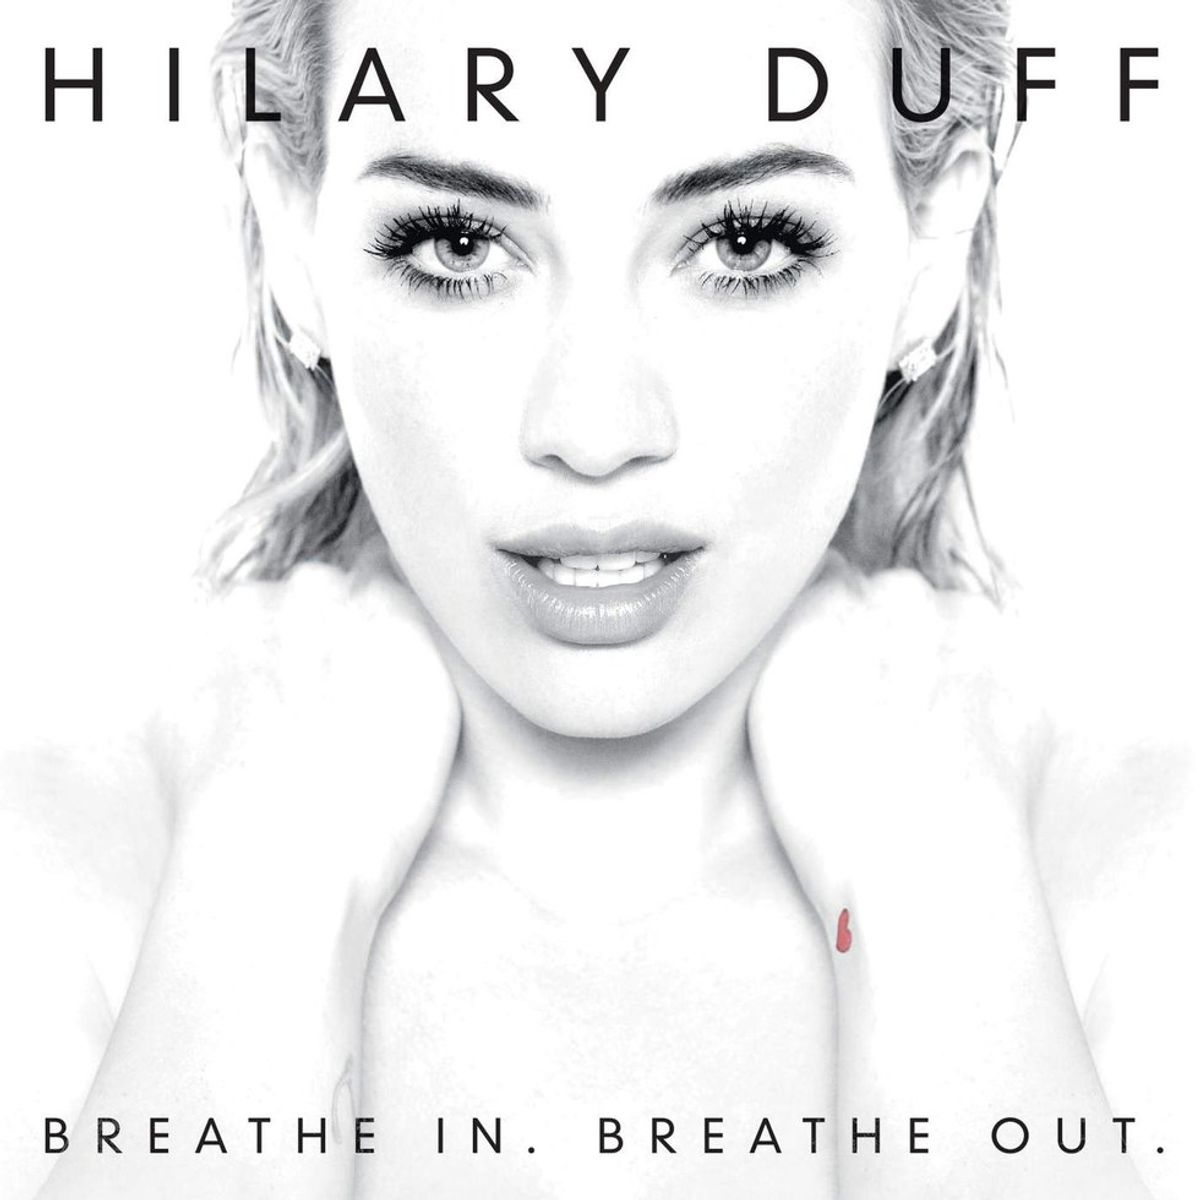 Hilary Duff's New Album Is A Breath of Fresh Air